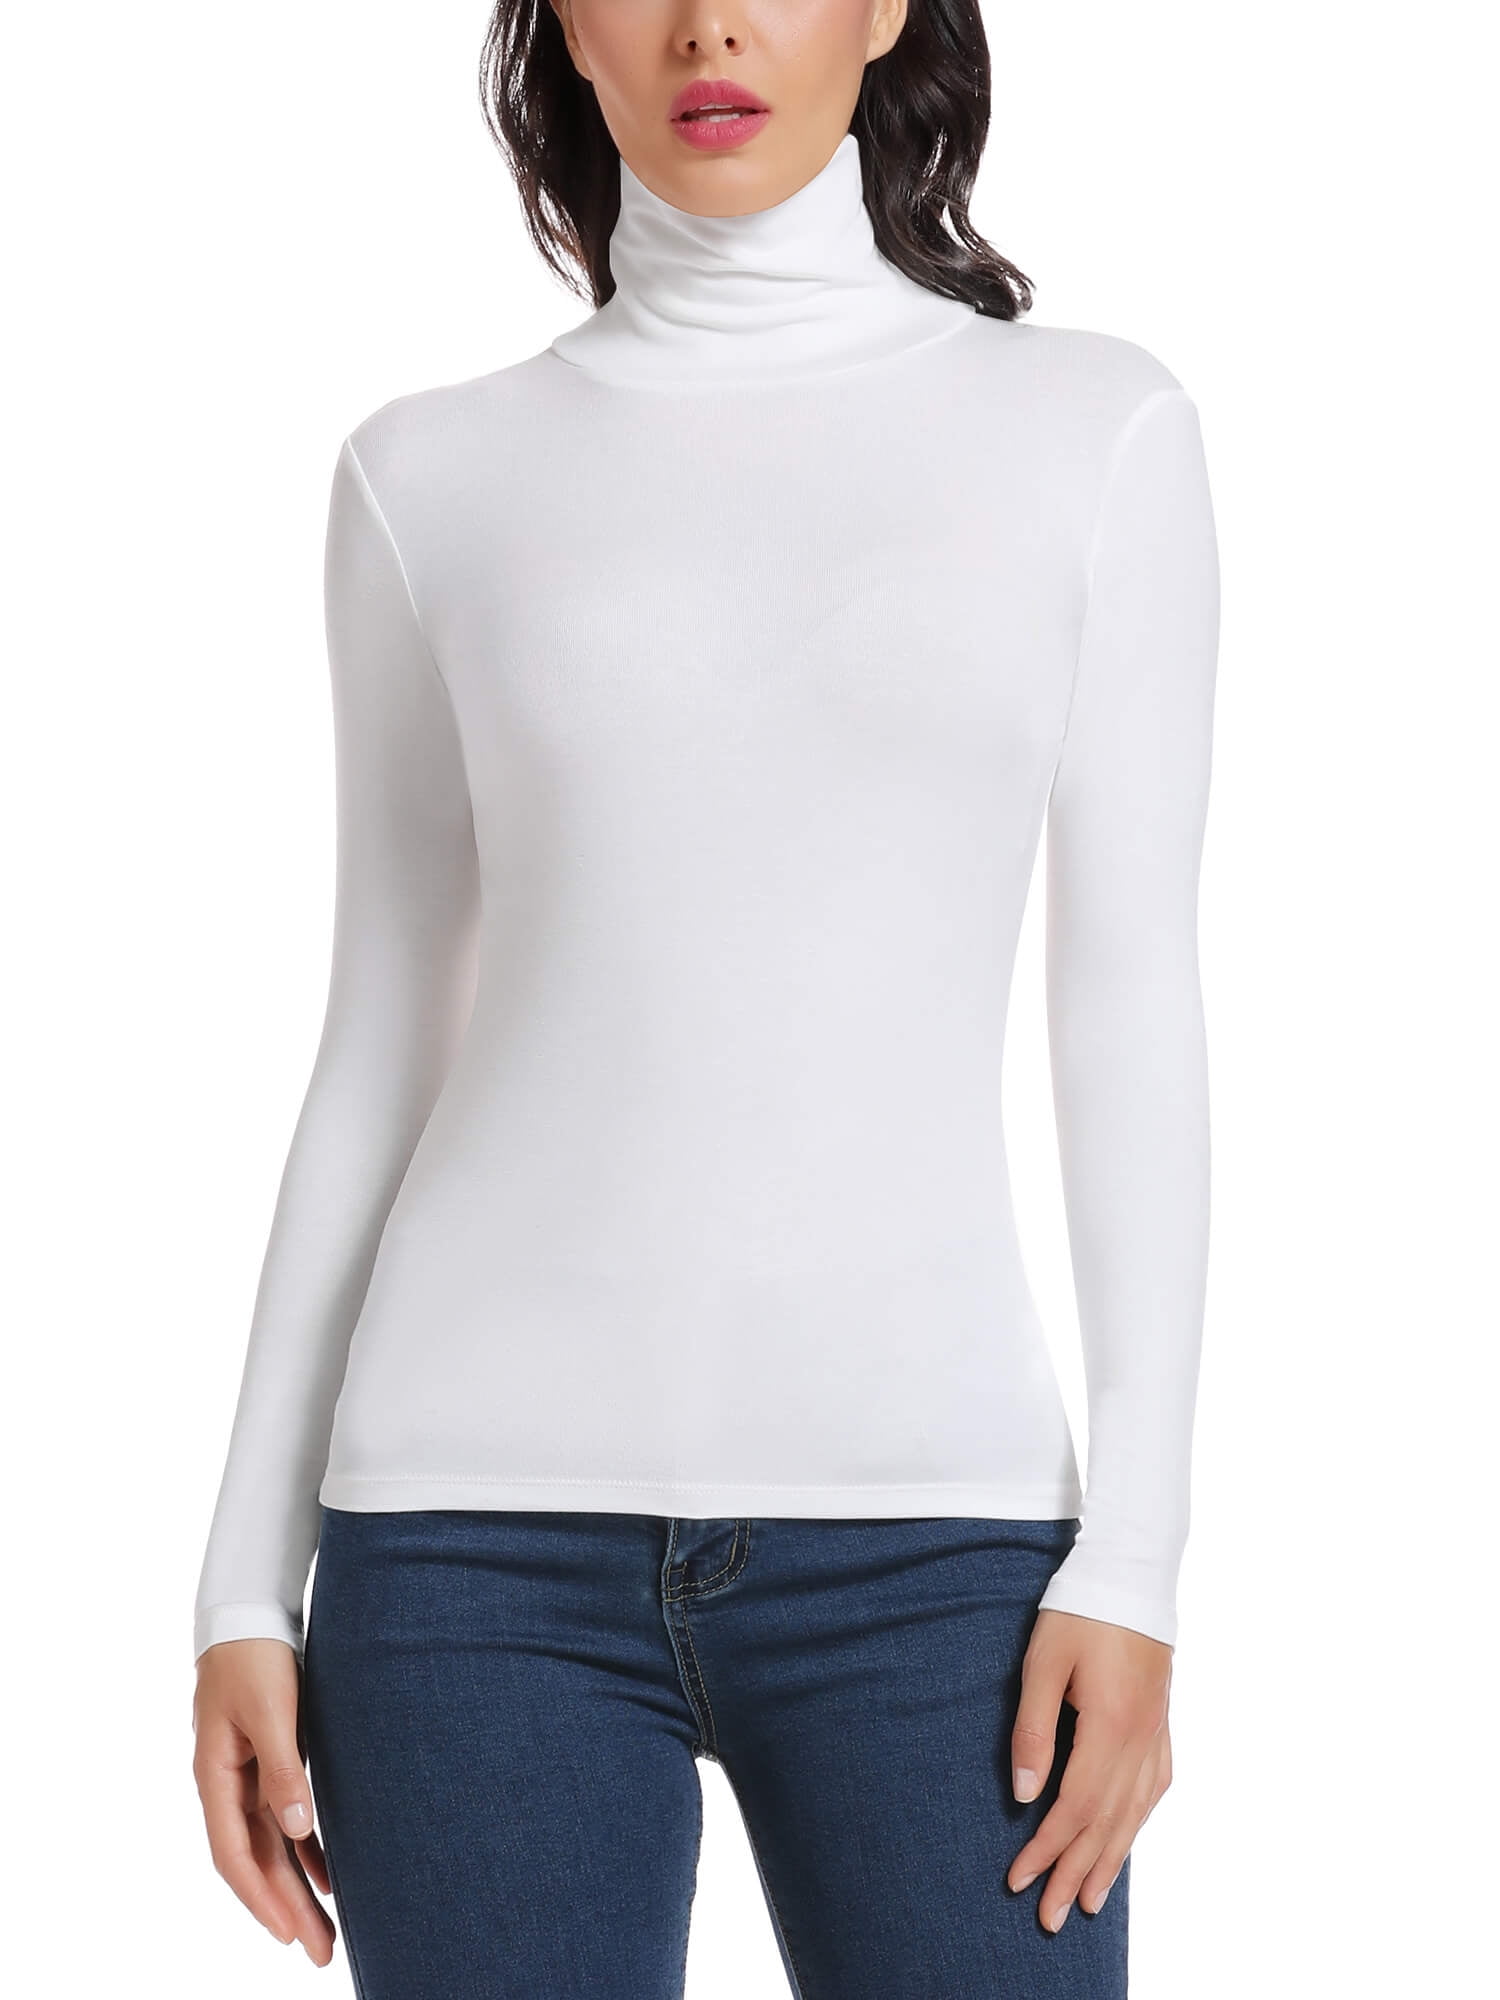 MANIFIQUE White Long Sleeve Shirts for Women Turtleneck Fall Fashion ...